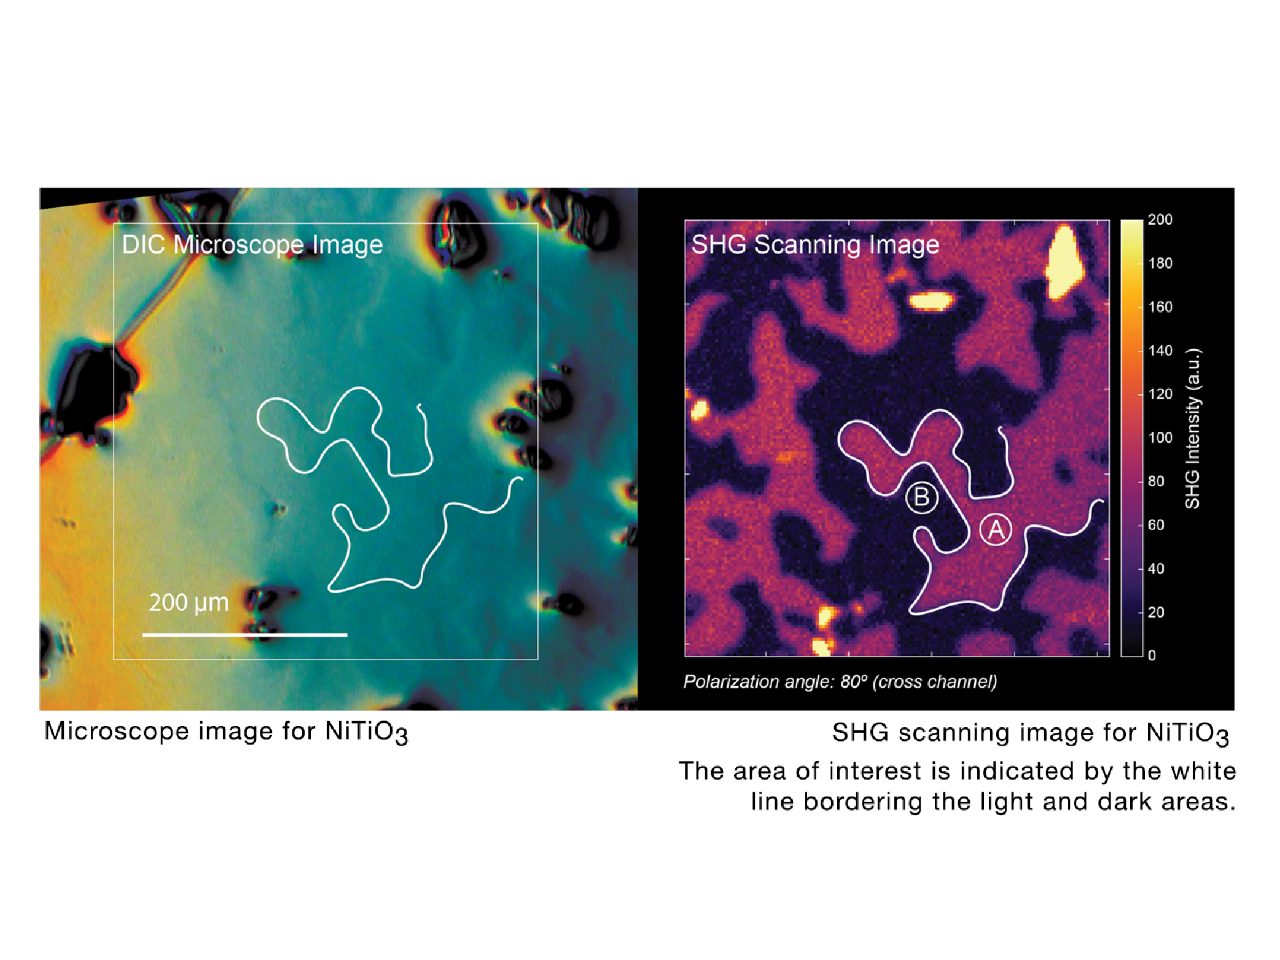 DIC microscope image